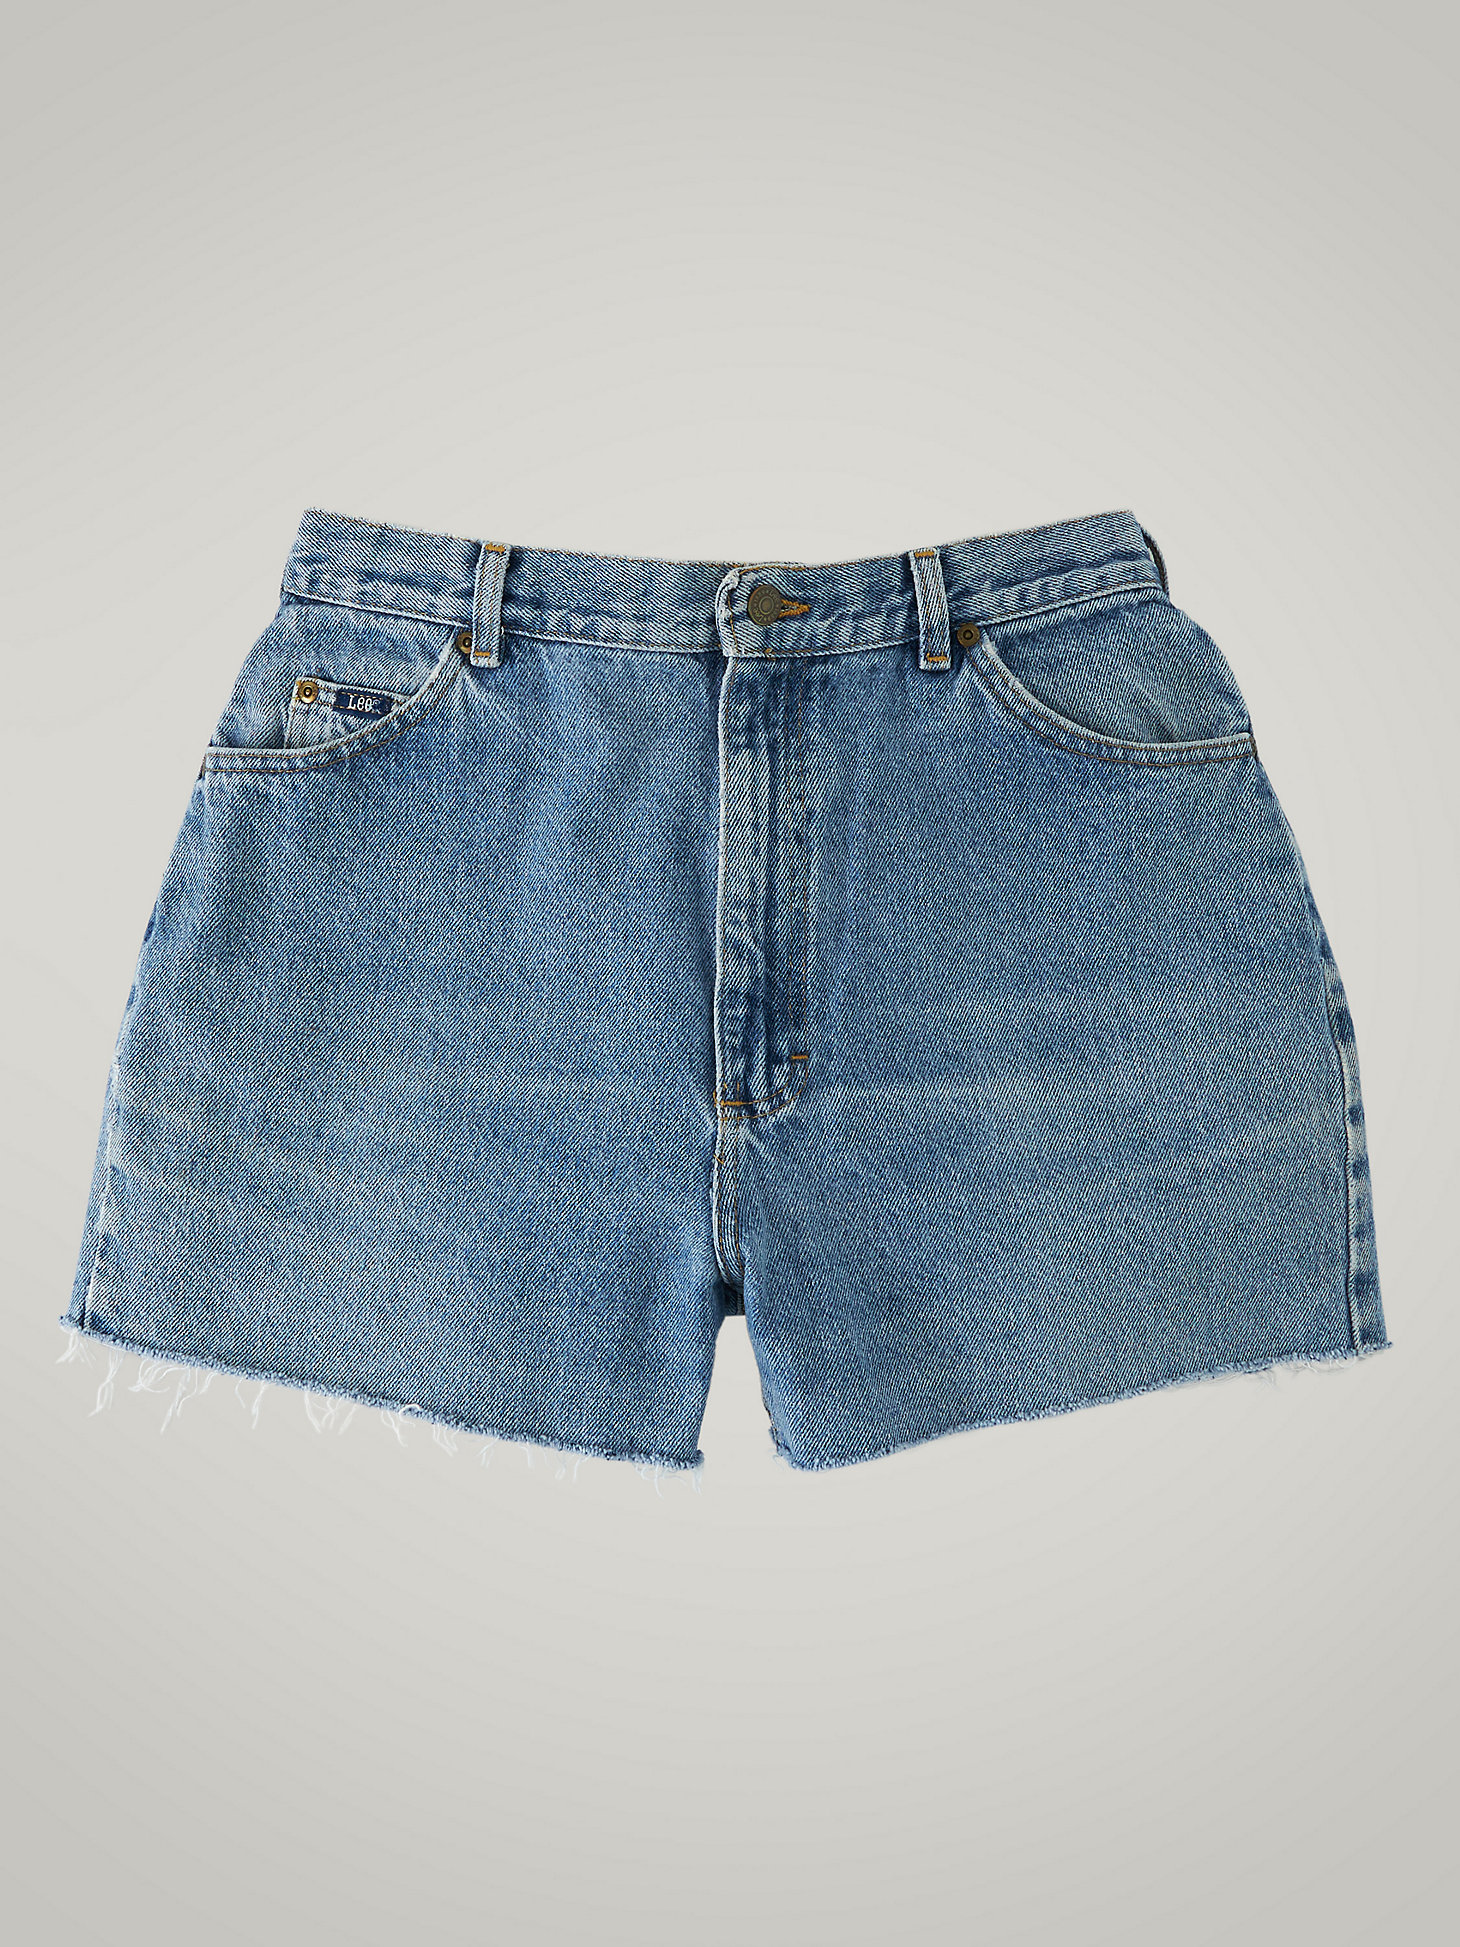 Women's Vintage Cut-Off Shorts WS31 (Size 31) in Medium Denim main view